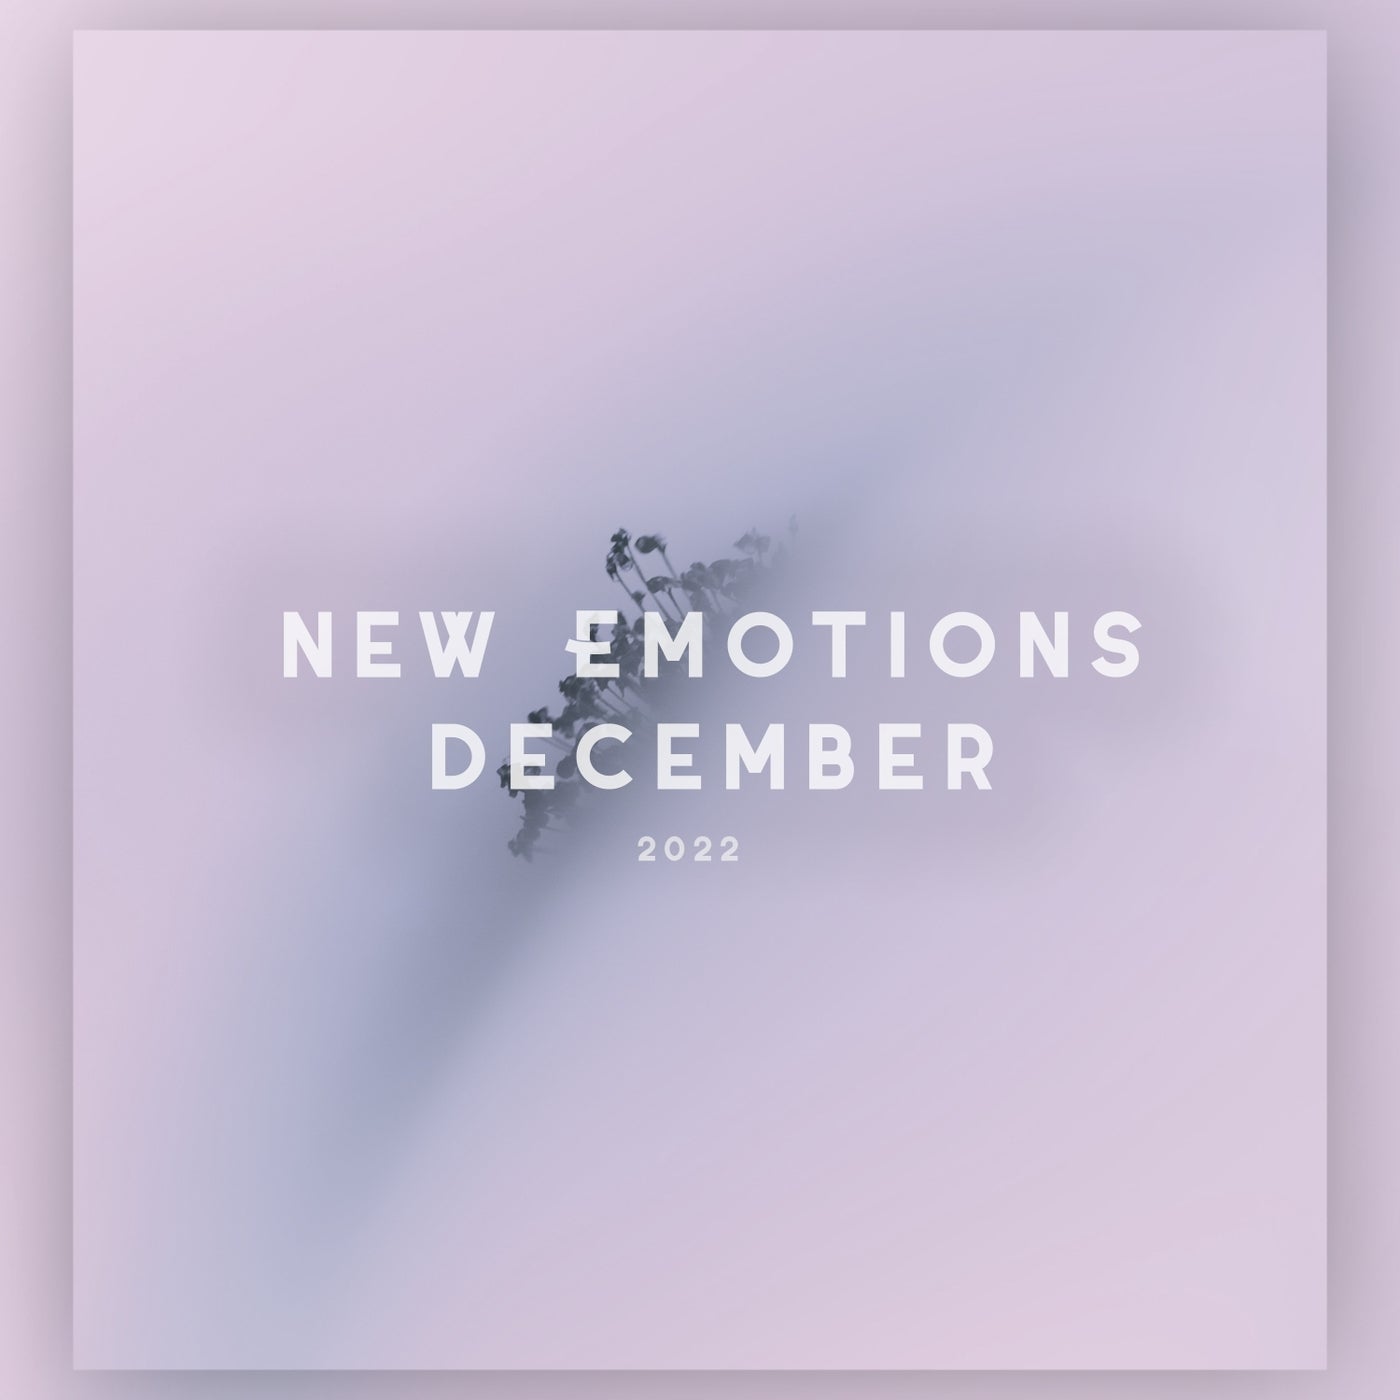 New Emotions December 2022